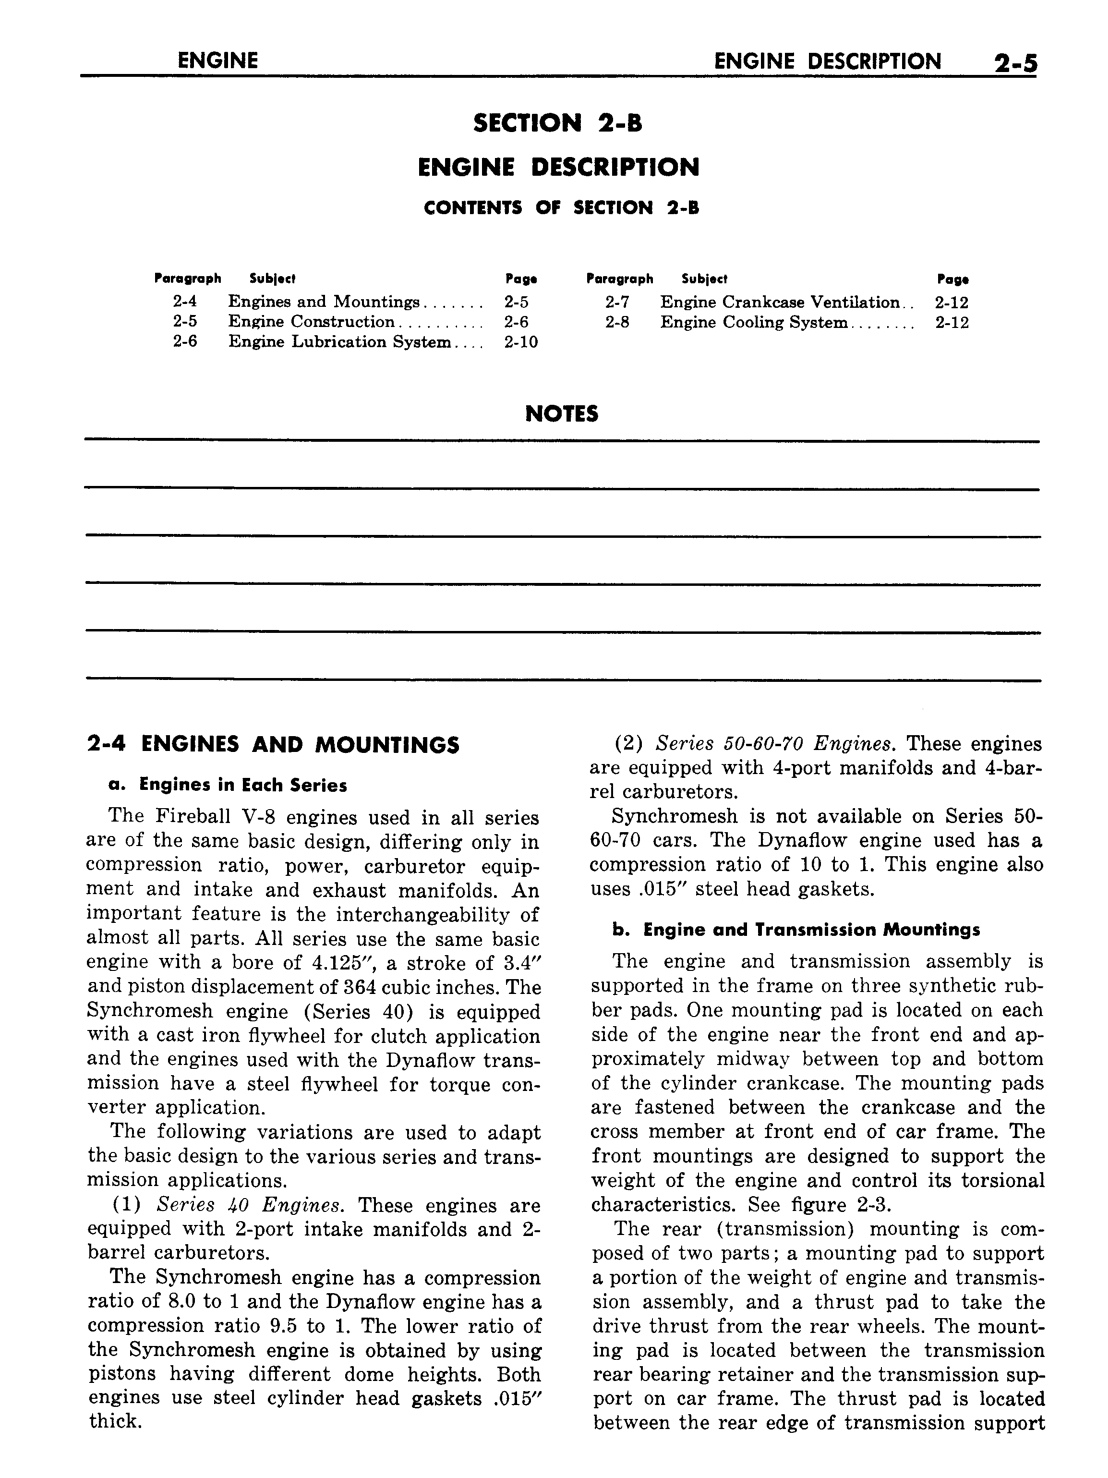 n_03 1957 Buick Shop Manual - Engine-005-005.jpg